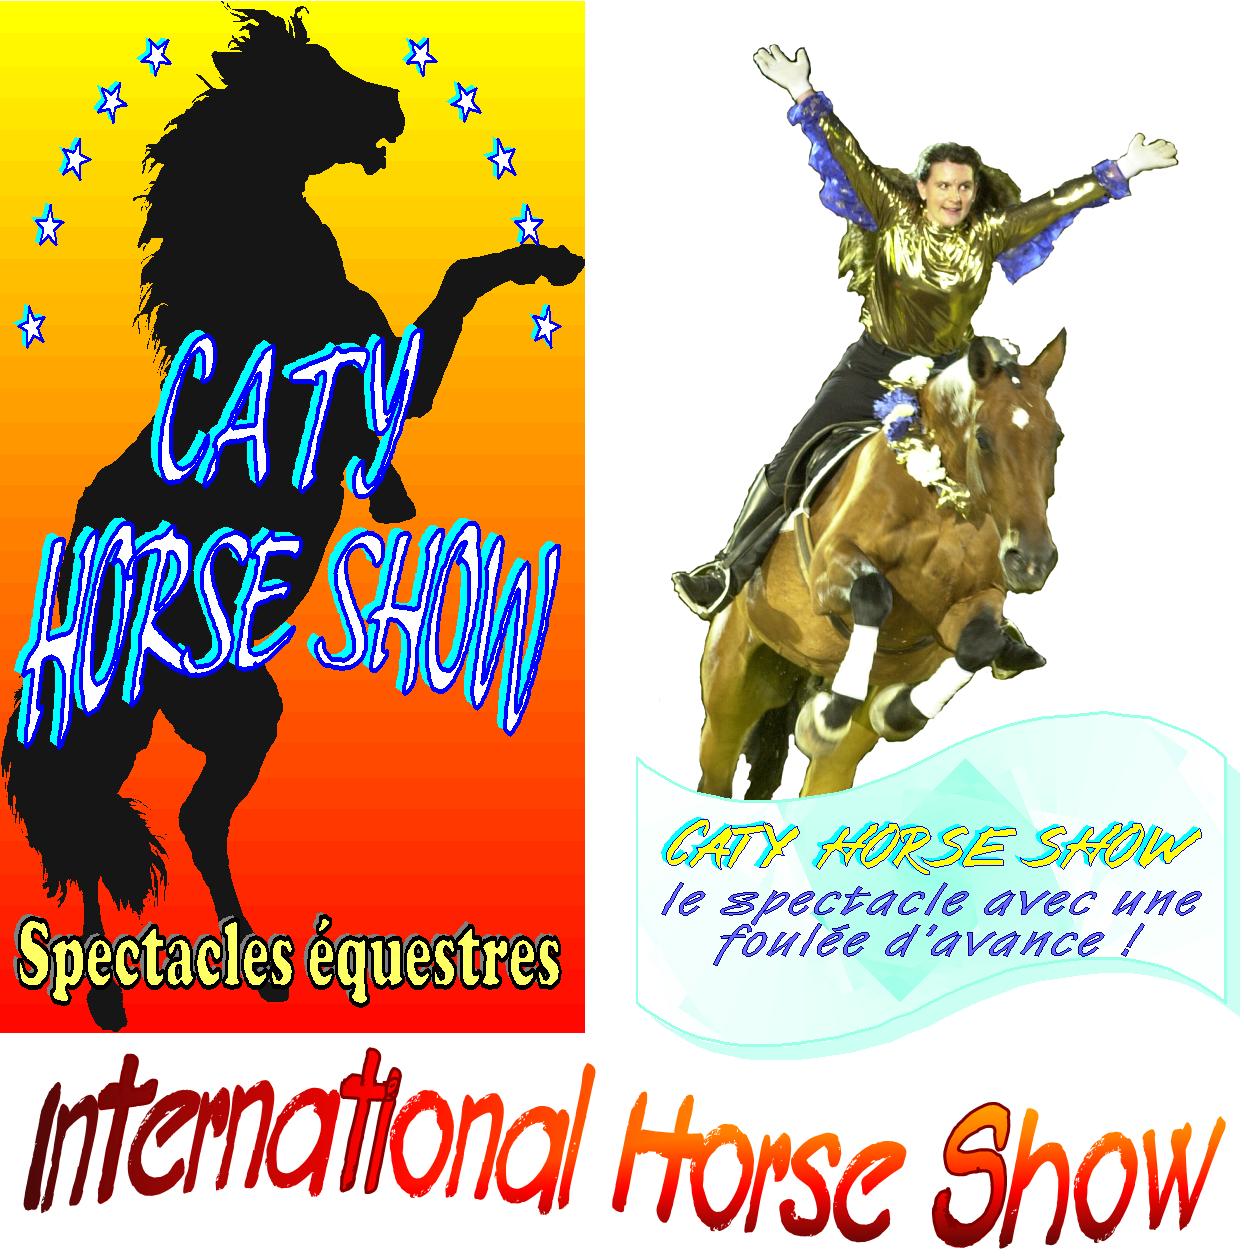 CATY HORSE SHOW